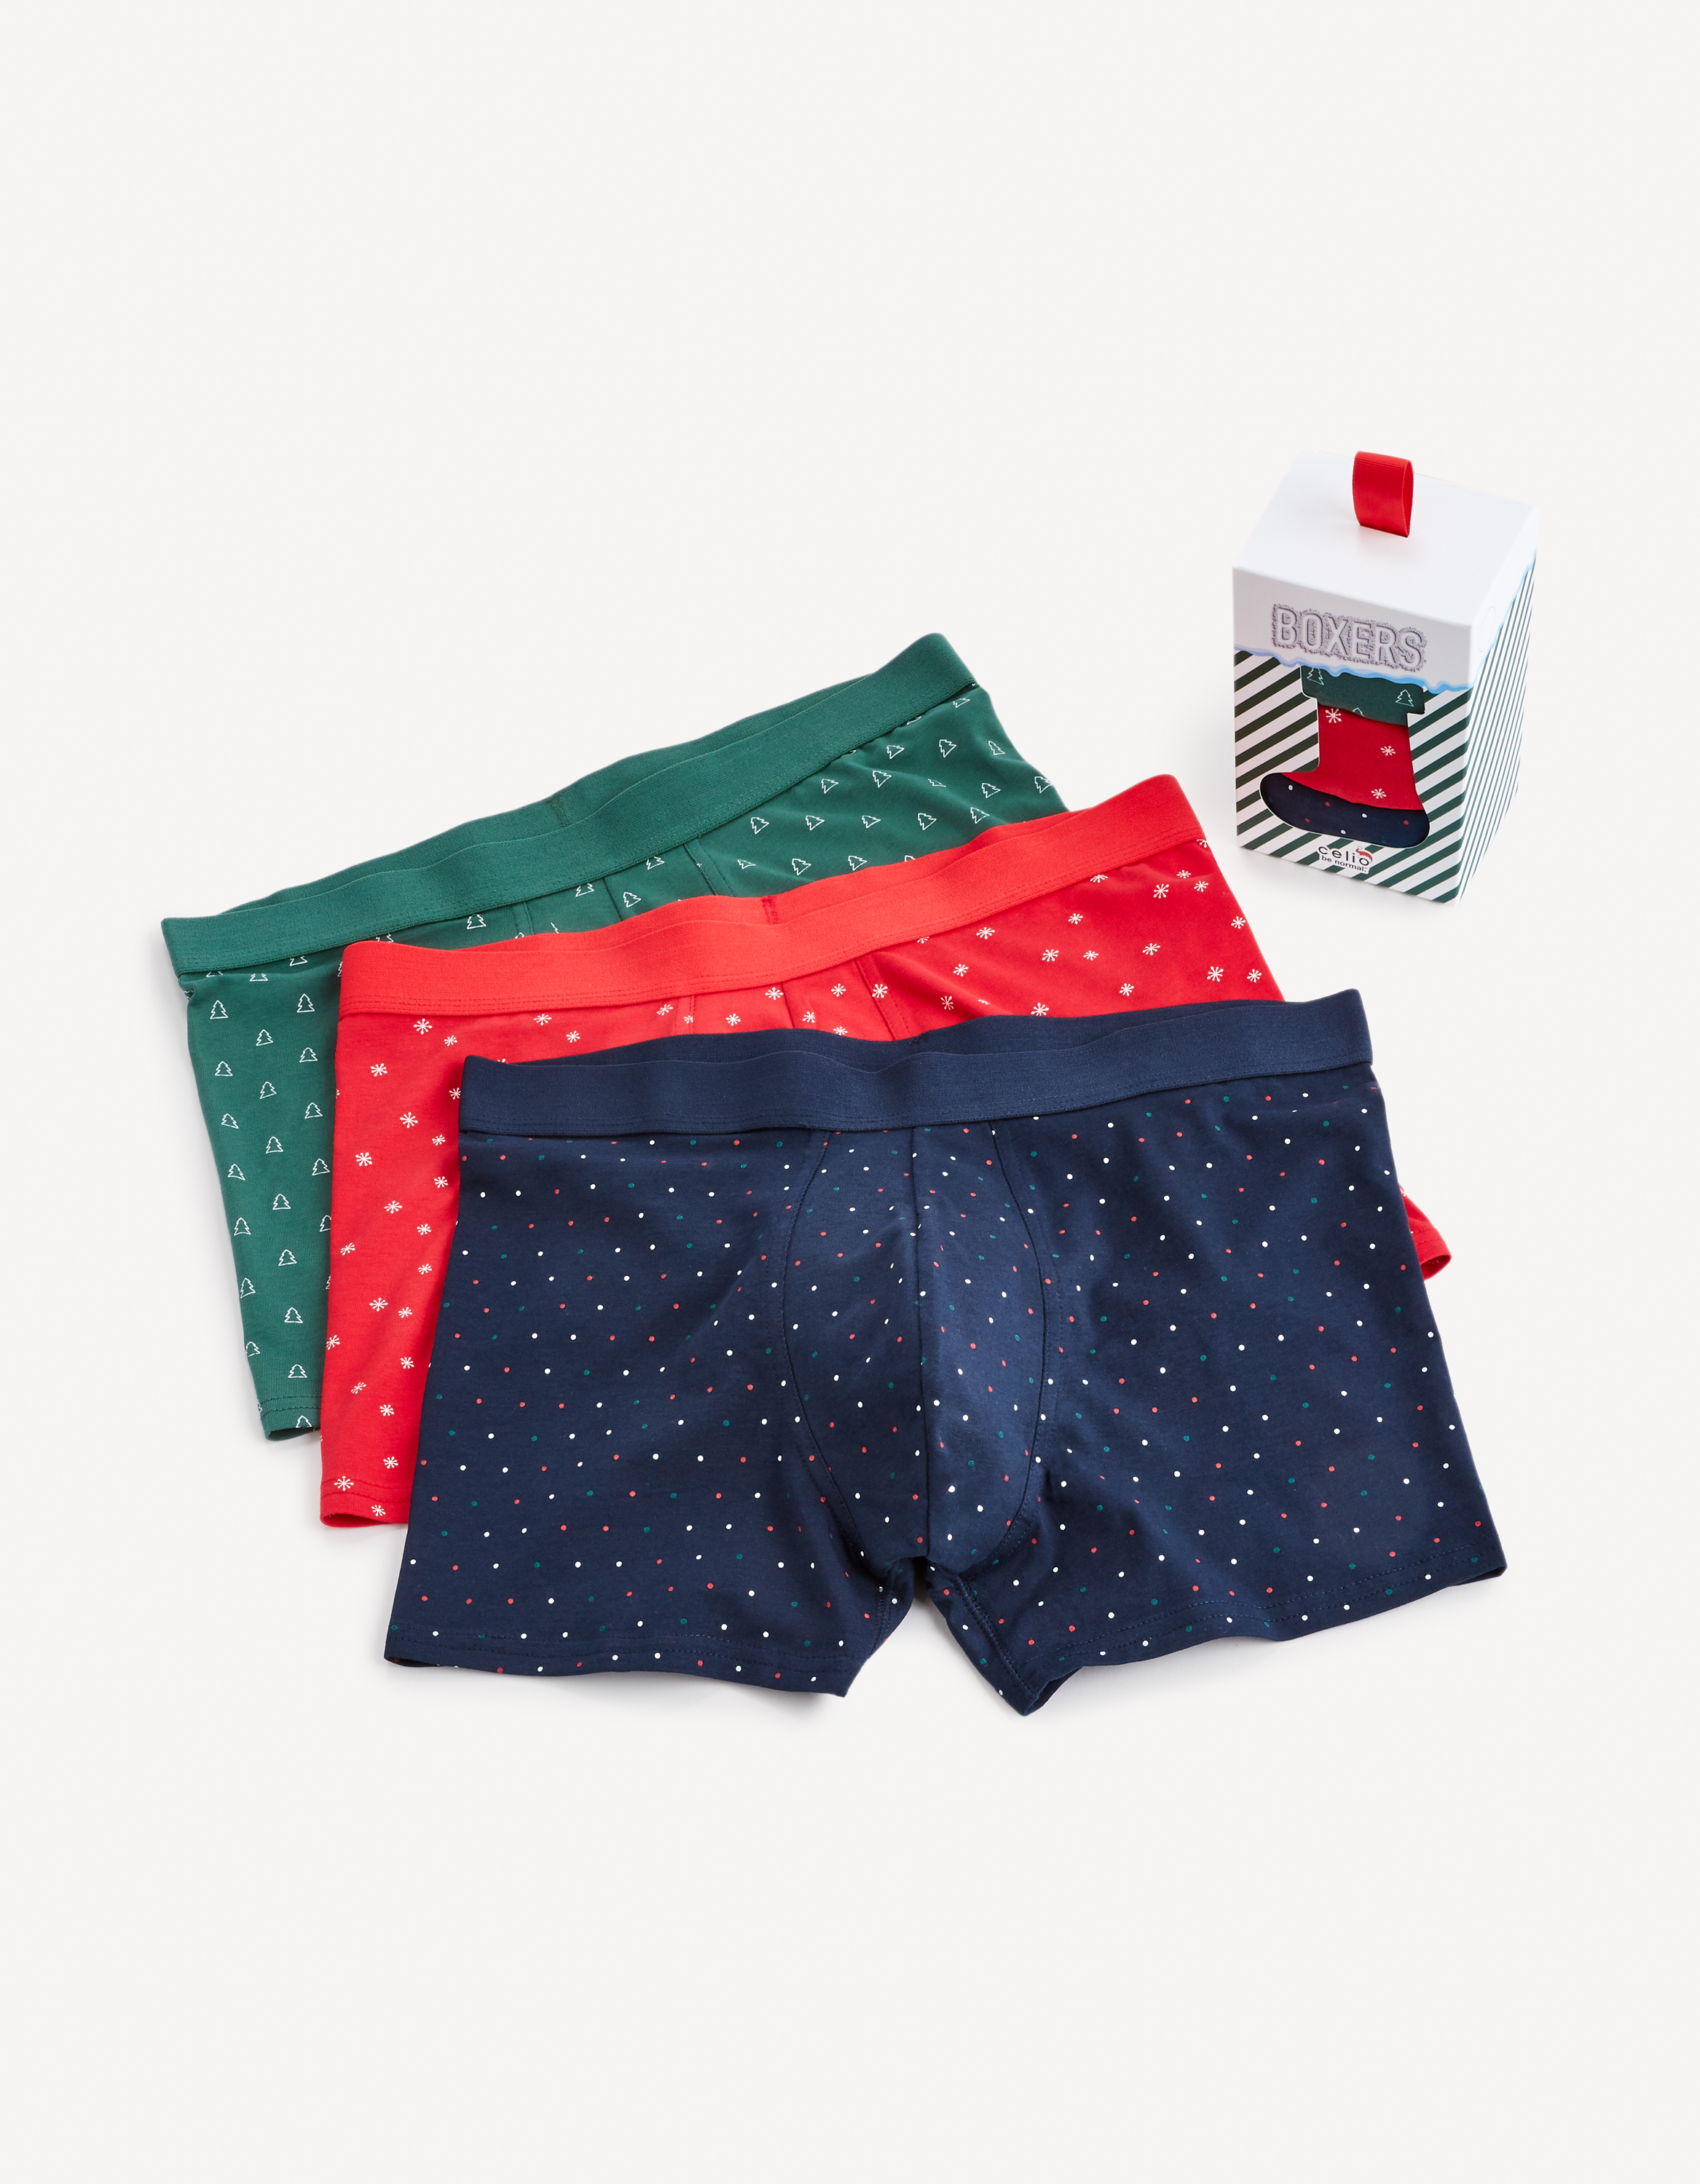 Celio Boxer Shorts in a Gift Box, 3 Pieces - Men's